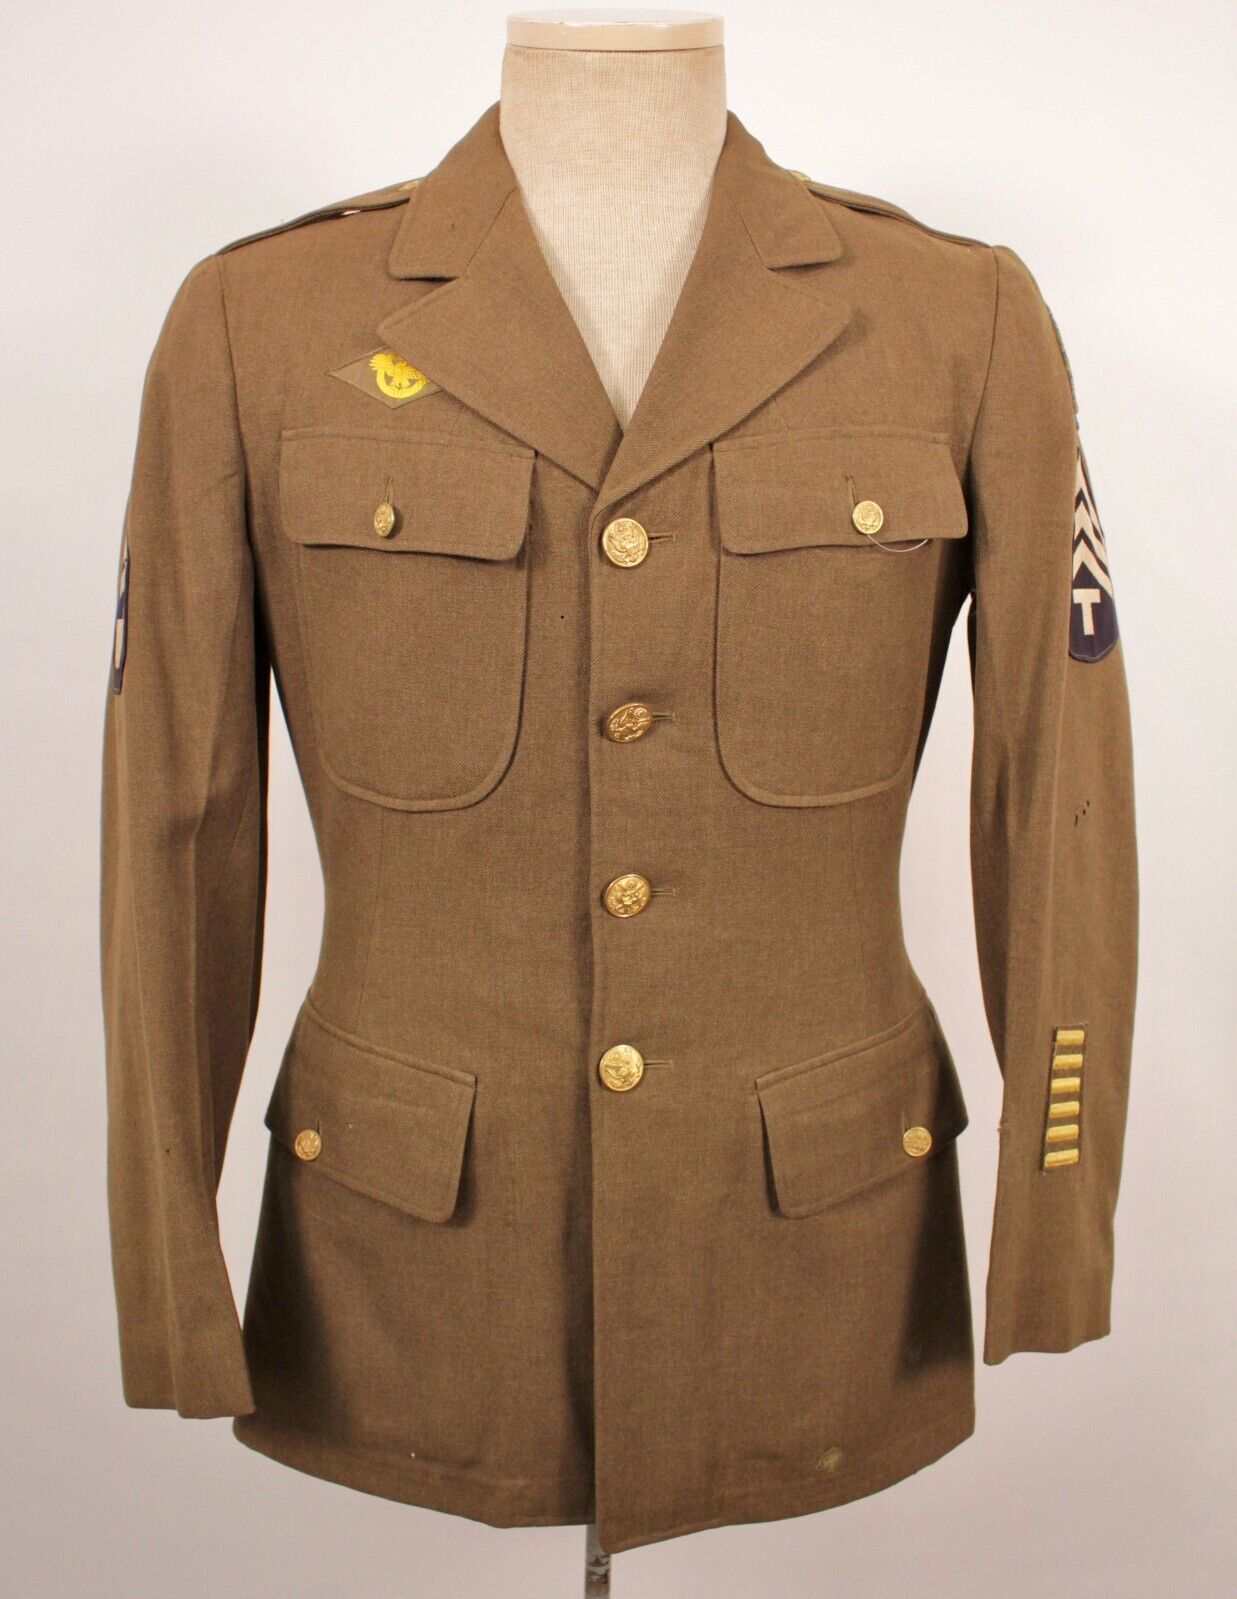 Men's WWII 1940s Wool US Army Tunic Uniform Jacket WW2 Amphibious Engineer